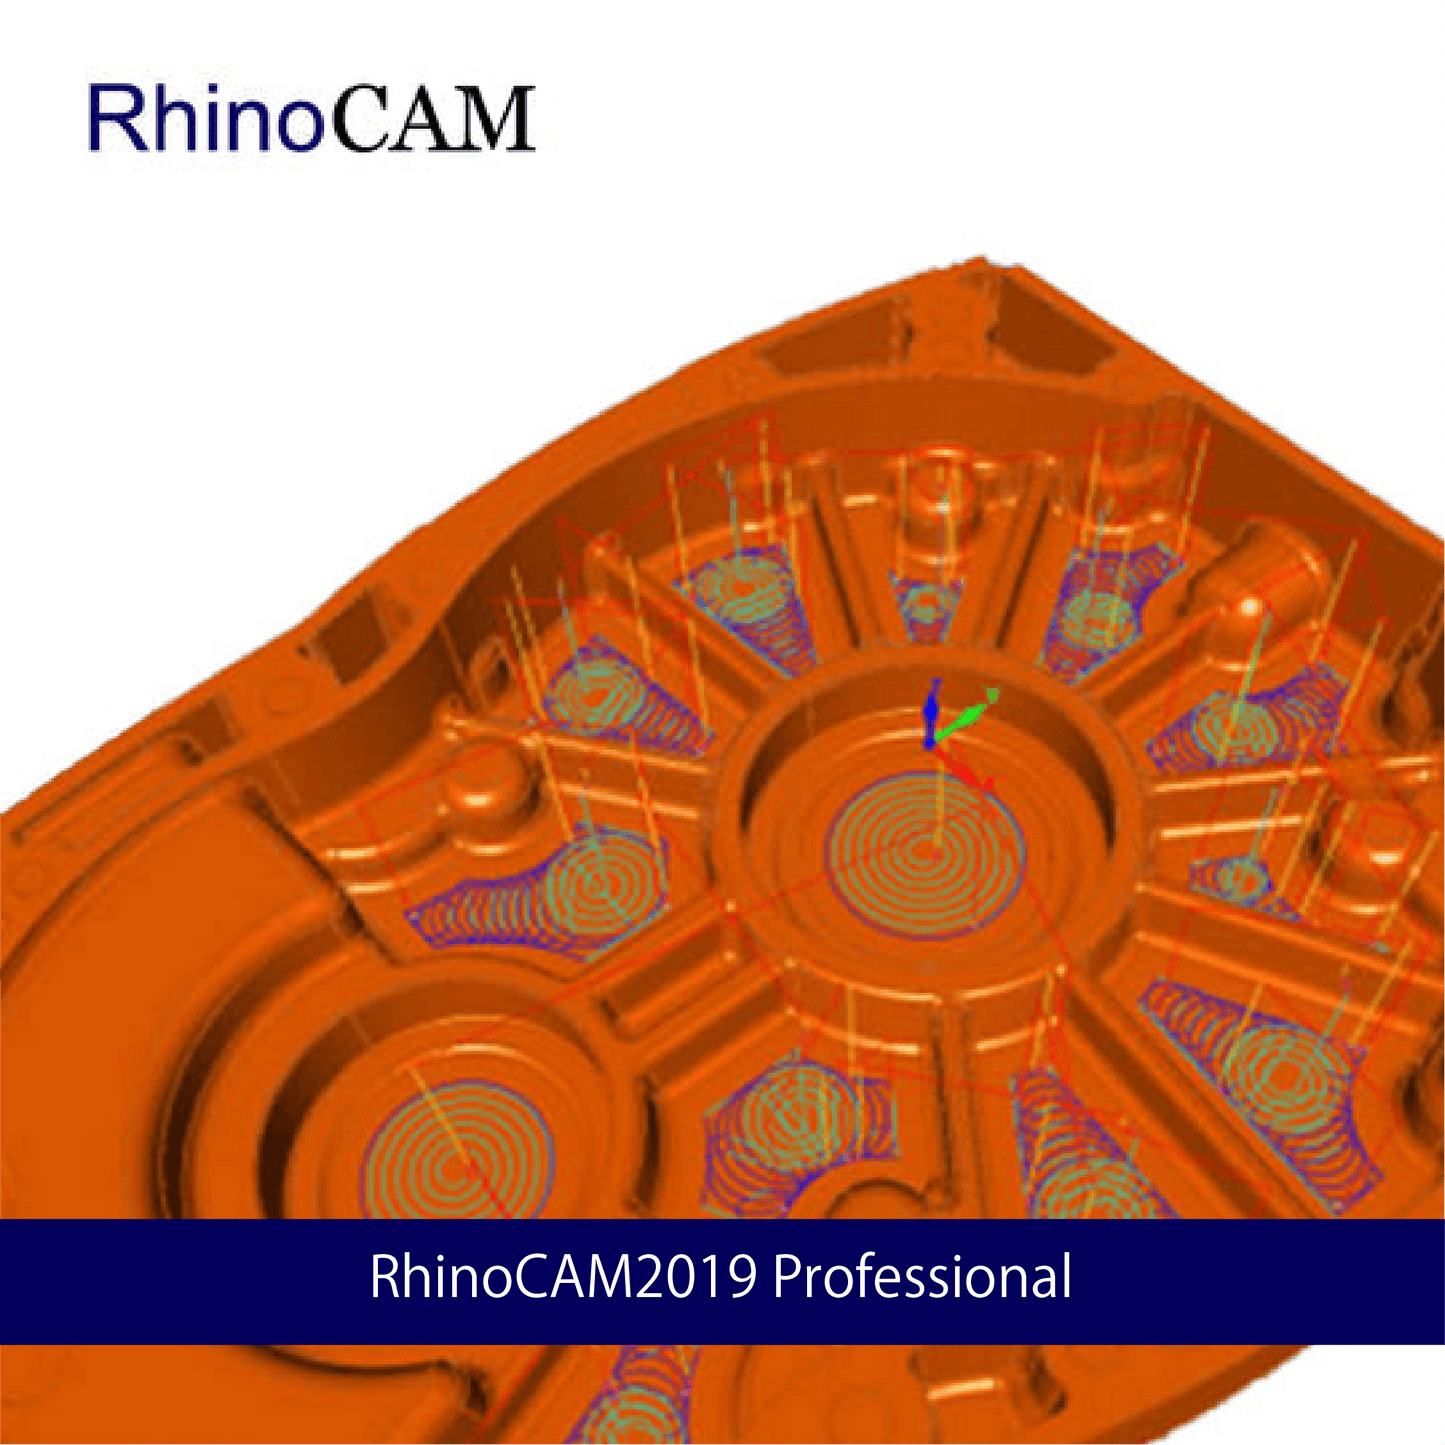 RhinoCAM2019 Professional